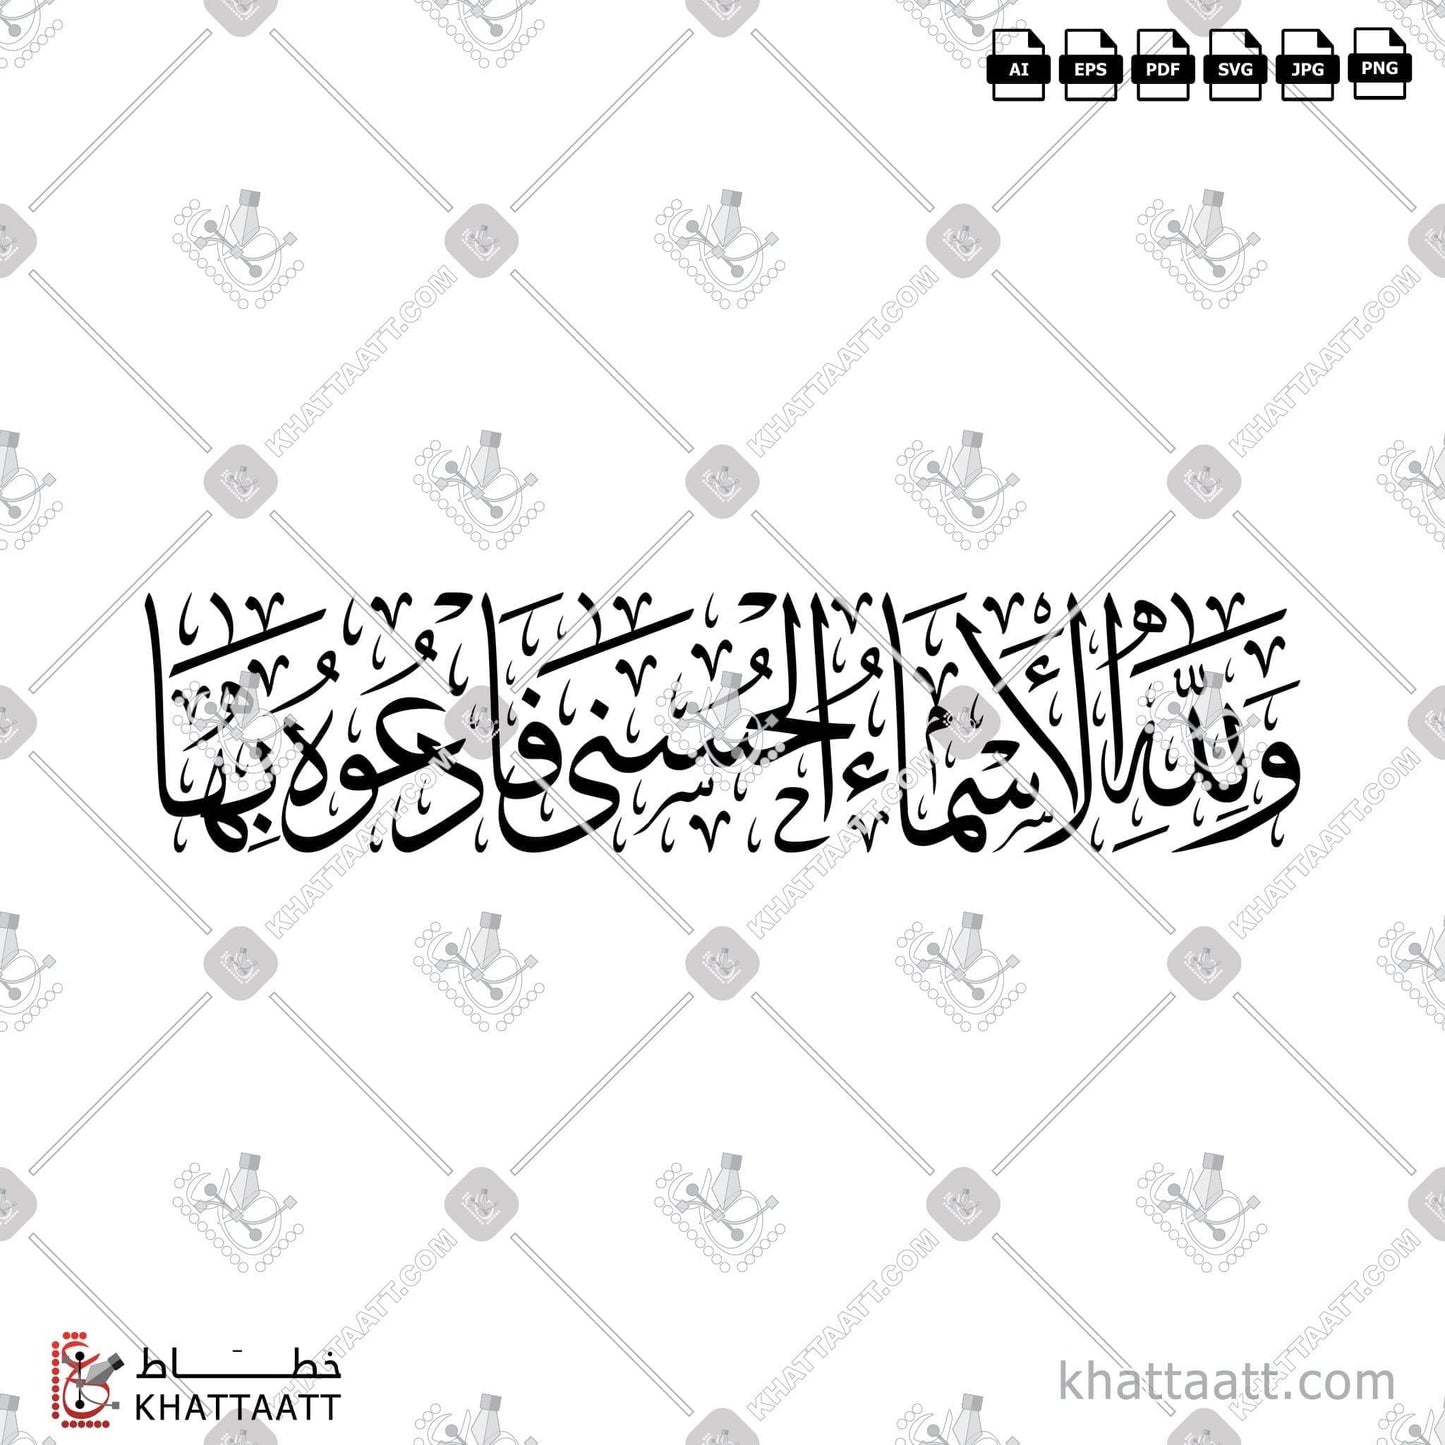 Download Arabic Calligraphy of ولله الاسماء الحسنى فادعوه بها in Thuluth - خط الثلث in vector and .png